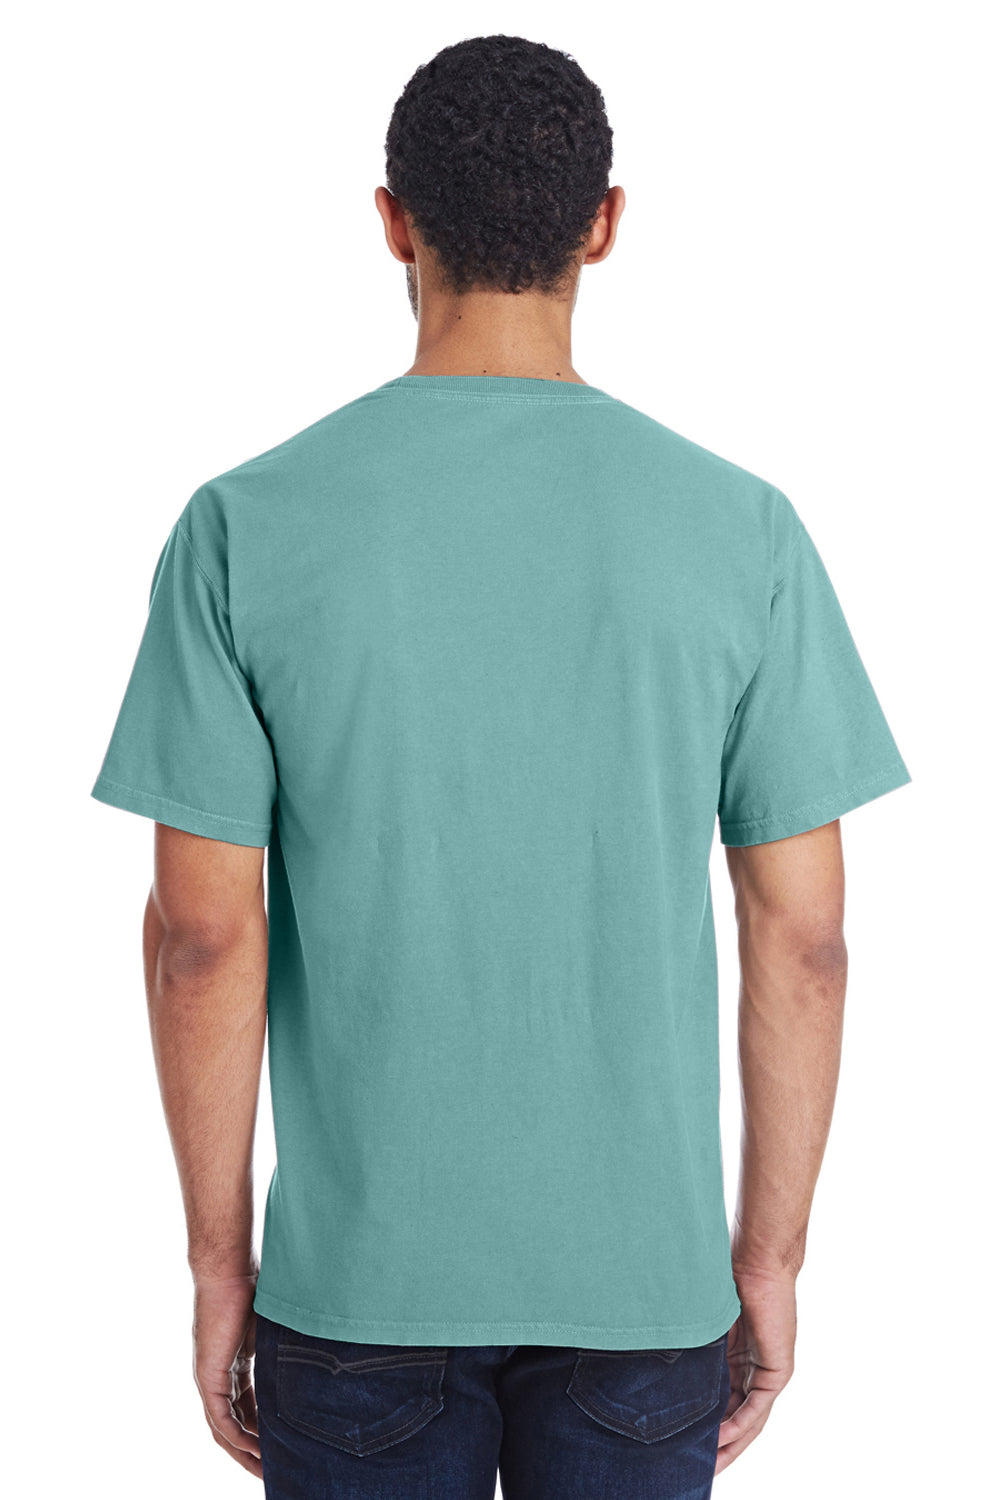 ComfortWash by Hanes GDH100 Short Sleeve Crewneck T-Shirt Spanish Moss Green Back